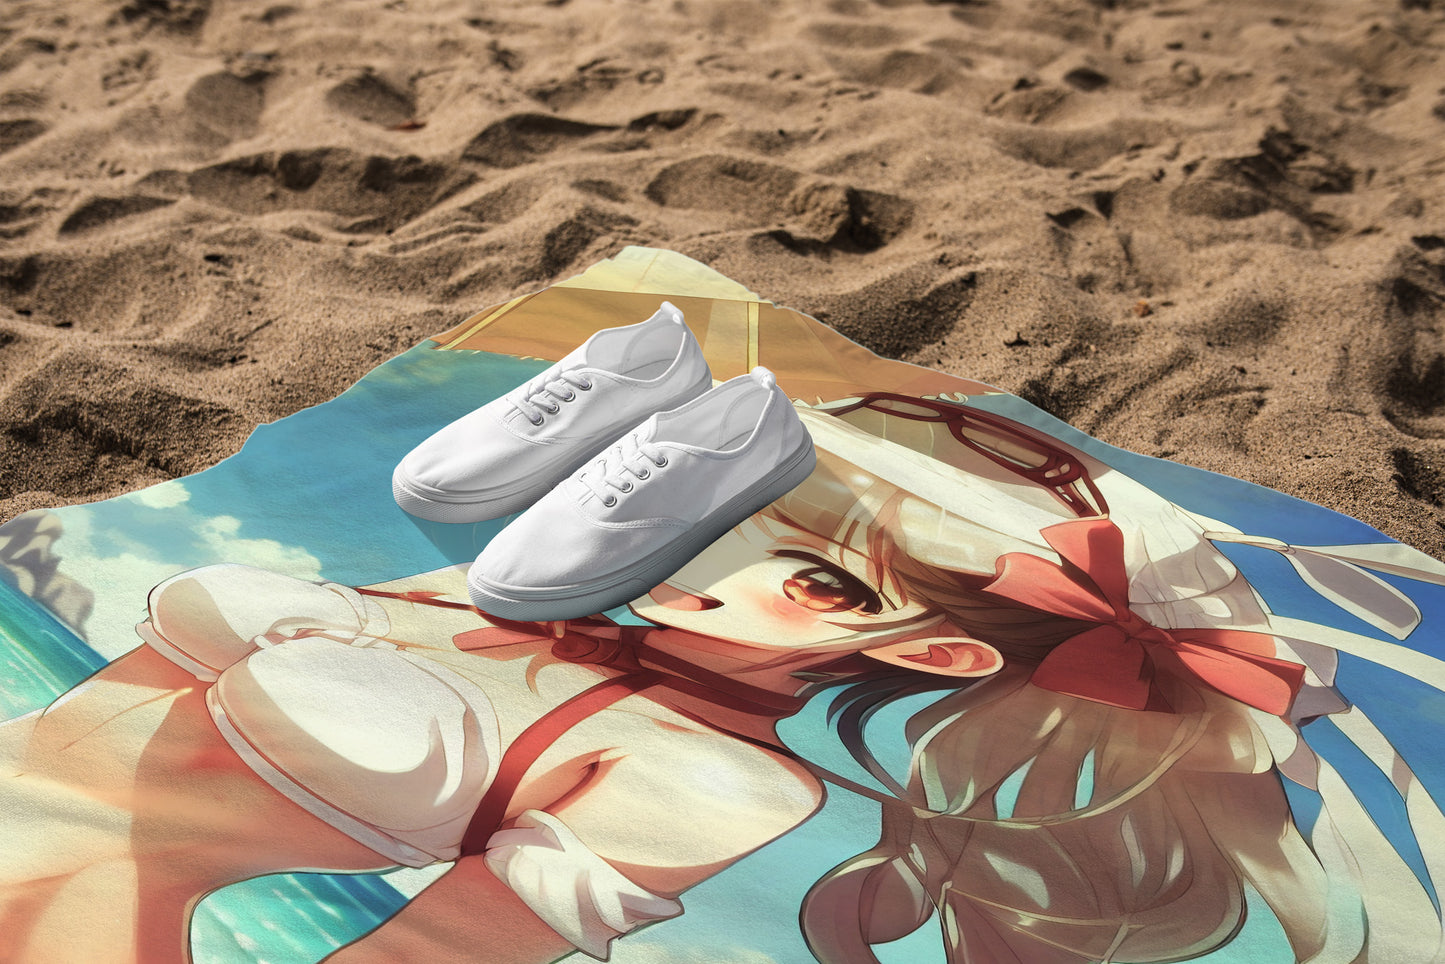 Anime Girl Boys MOBA Towel Beach Towel Game Battle Absorbent Microfiber  Soft Large Sand-Free Soft Queen Size Sand Free Beach Towel (1,L51in x W32in